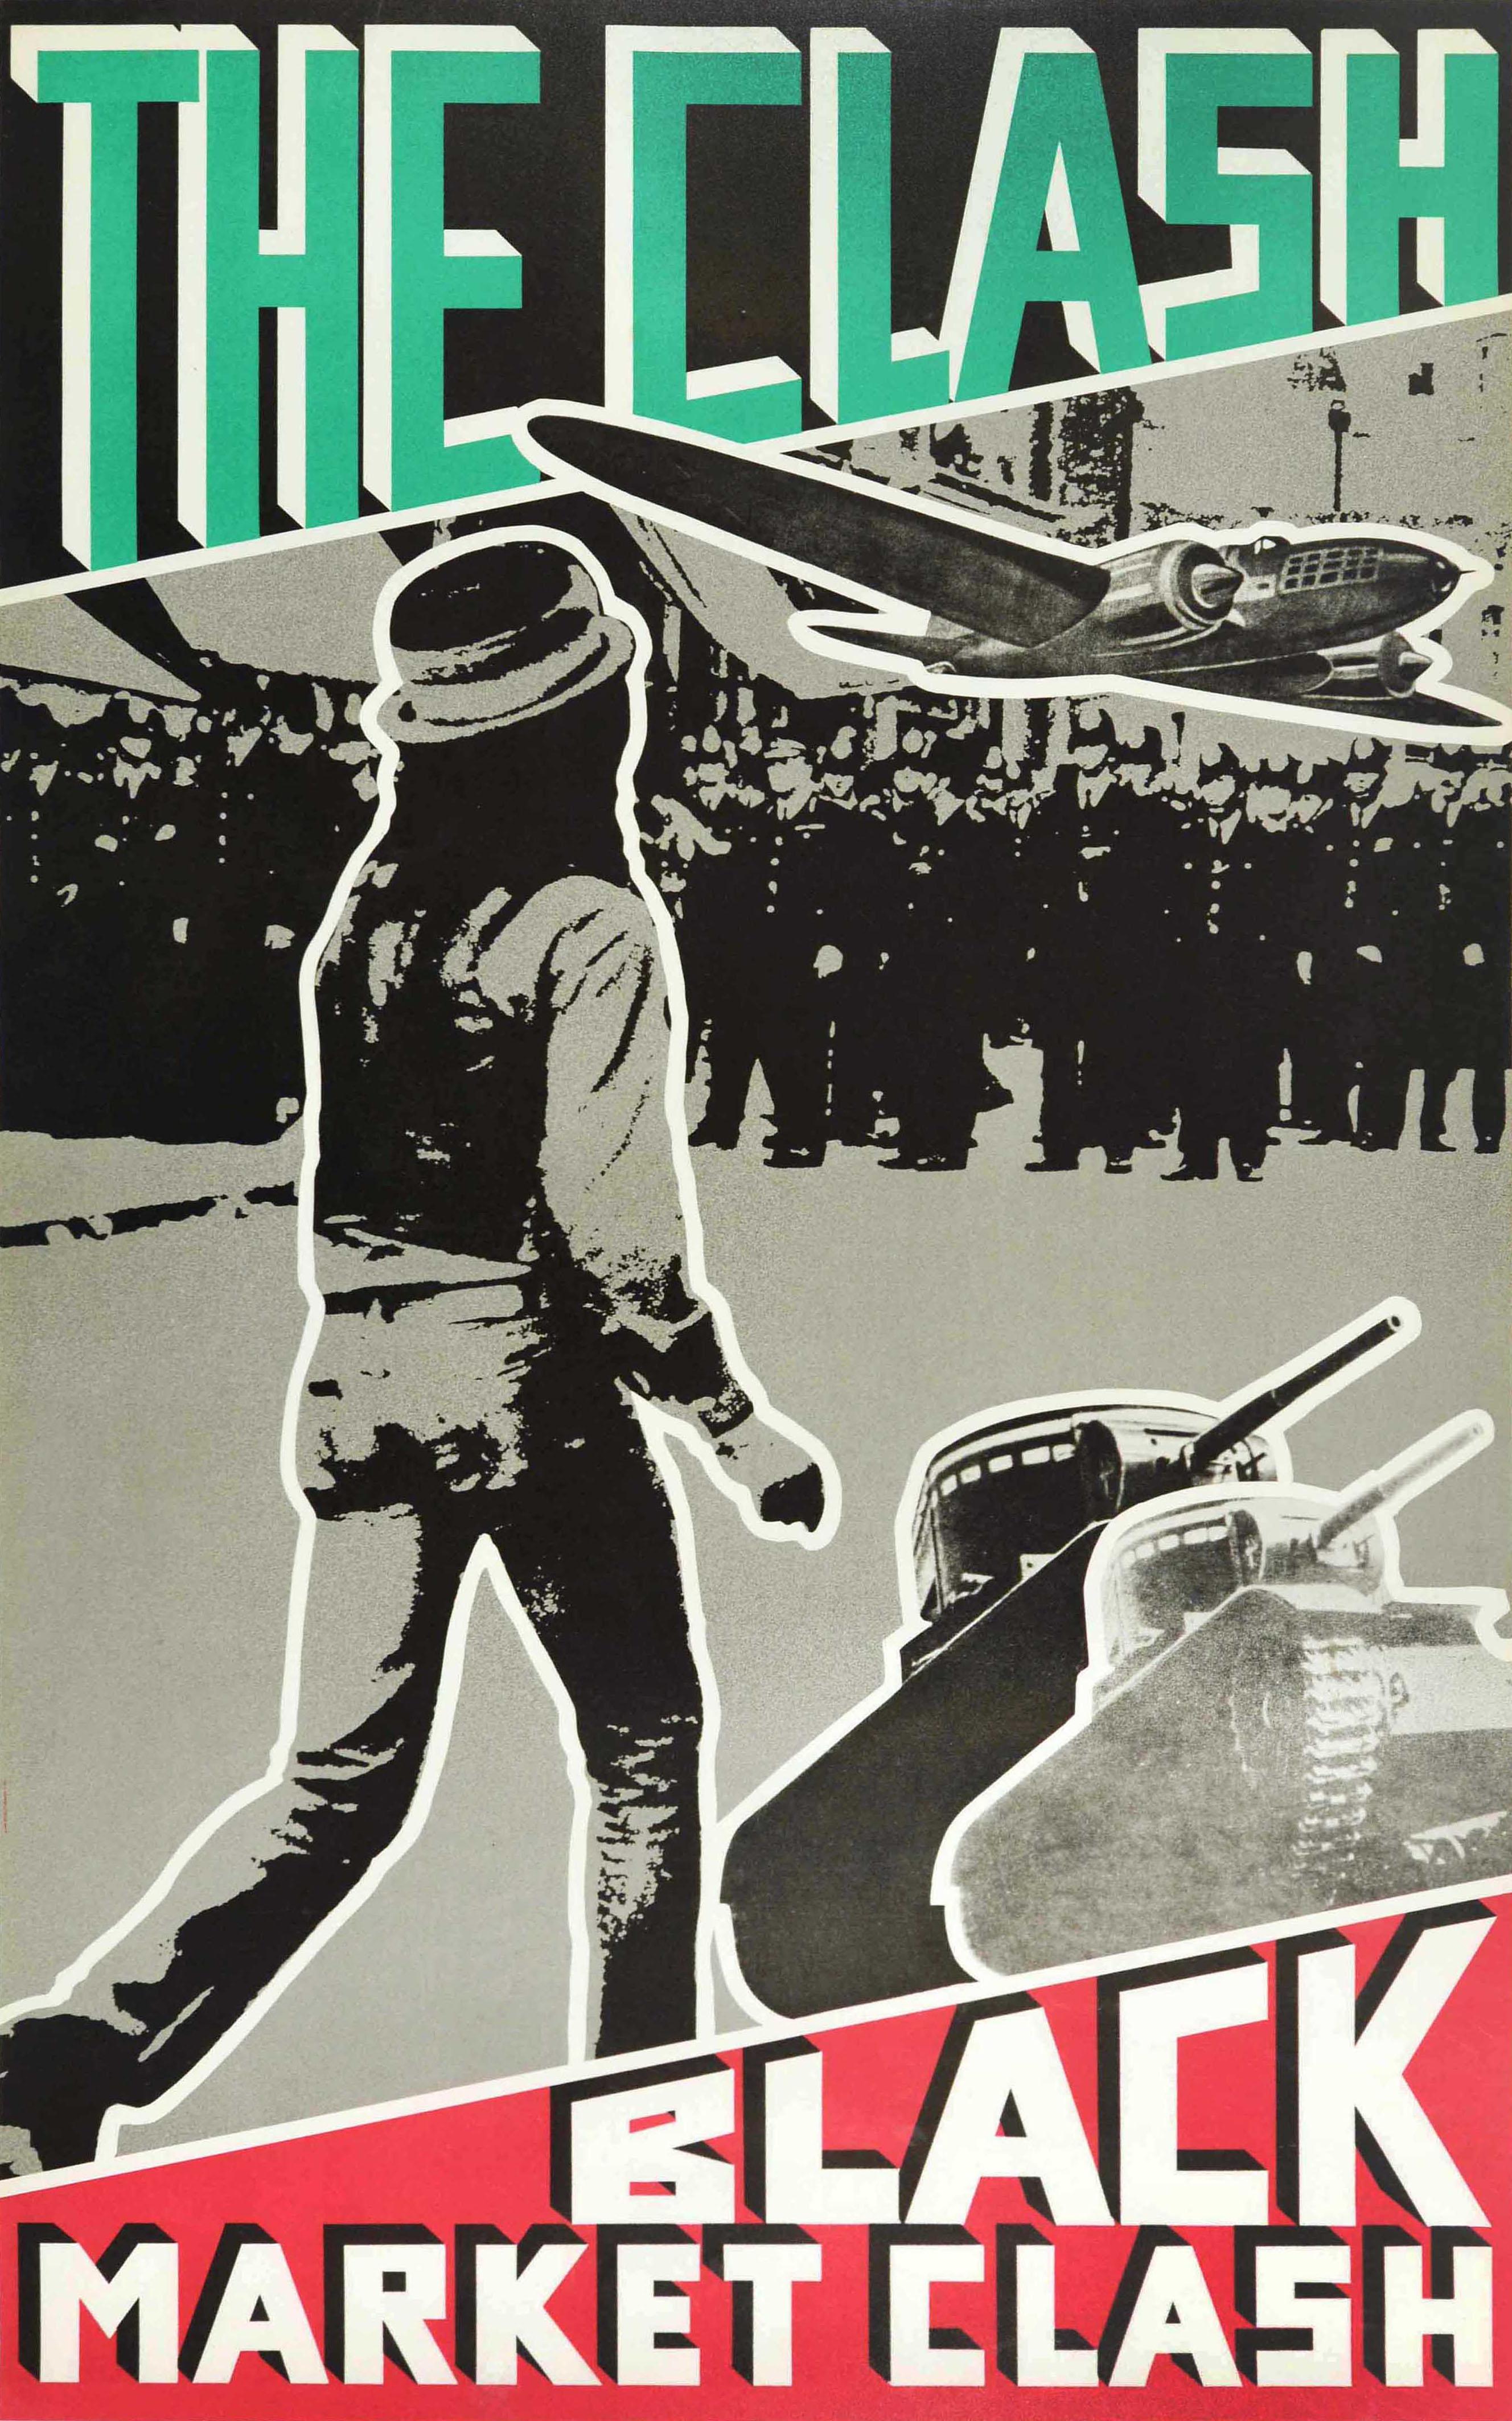 Unknown Print - Original Vintage Music Advertising Poster The Clash Punk Rock Black Market Clash